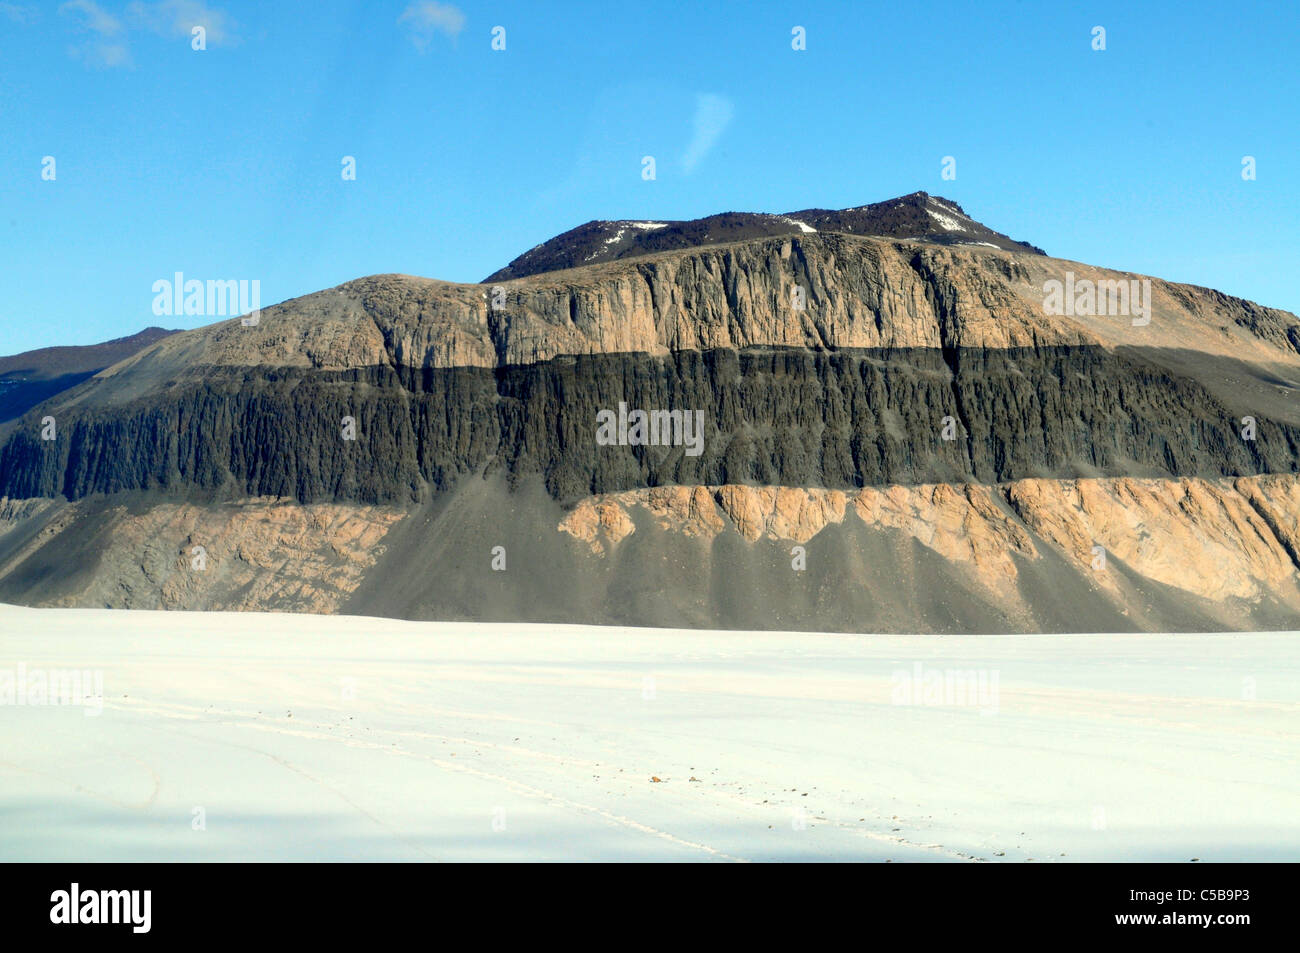 Prominent dolerite rock layer in sandstone, Pandora Spire upper Taylor Glacier McMurdo Dry Valleys Antarctica Stock Photo